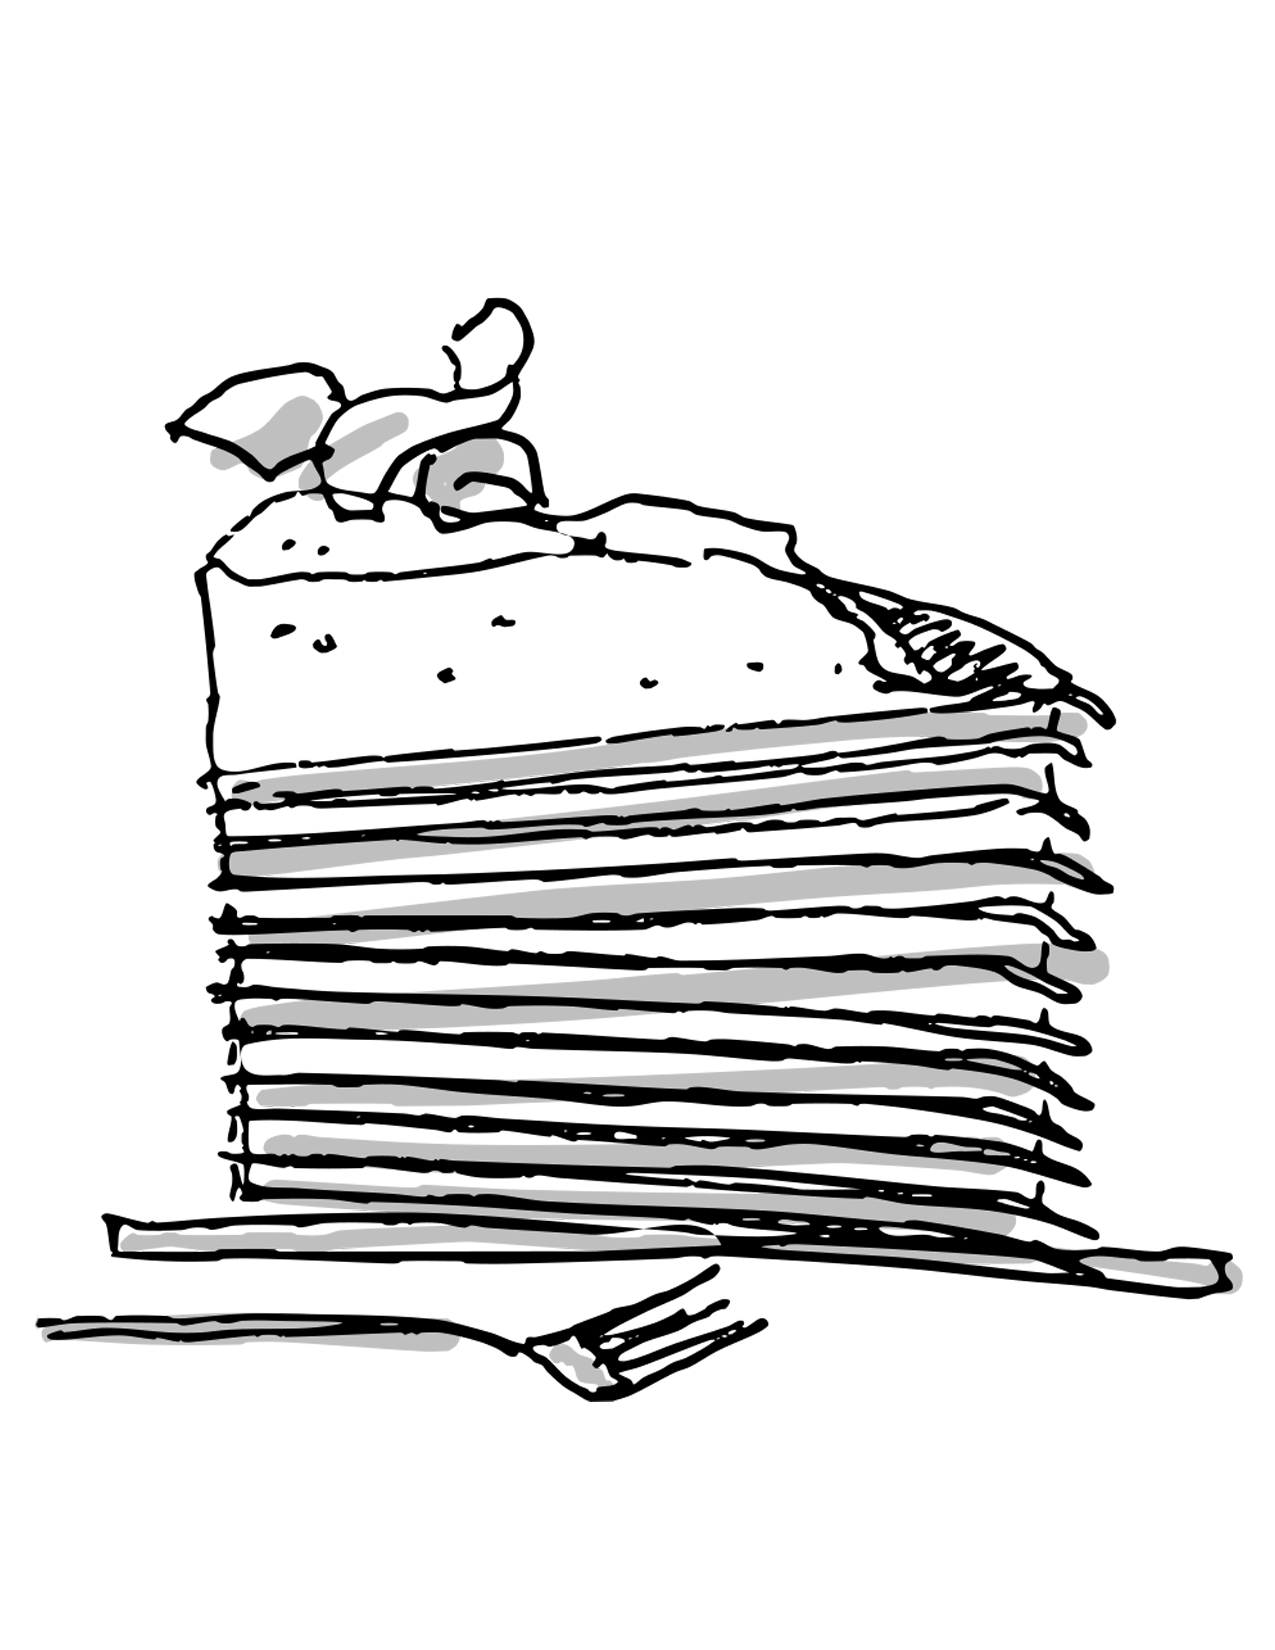 a sketch of a crepe cake